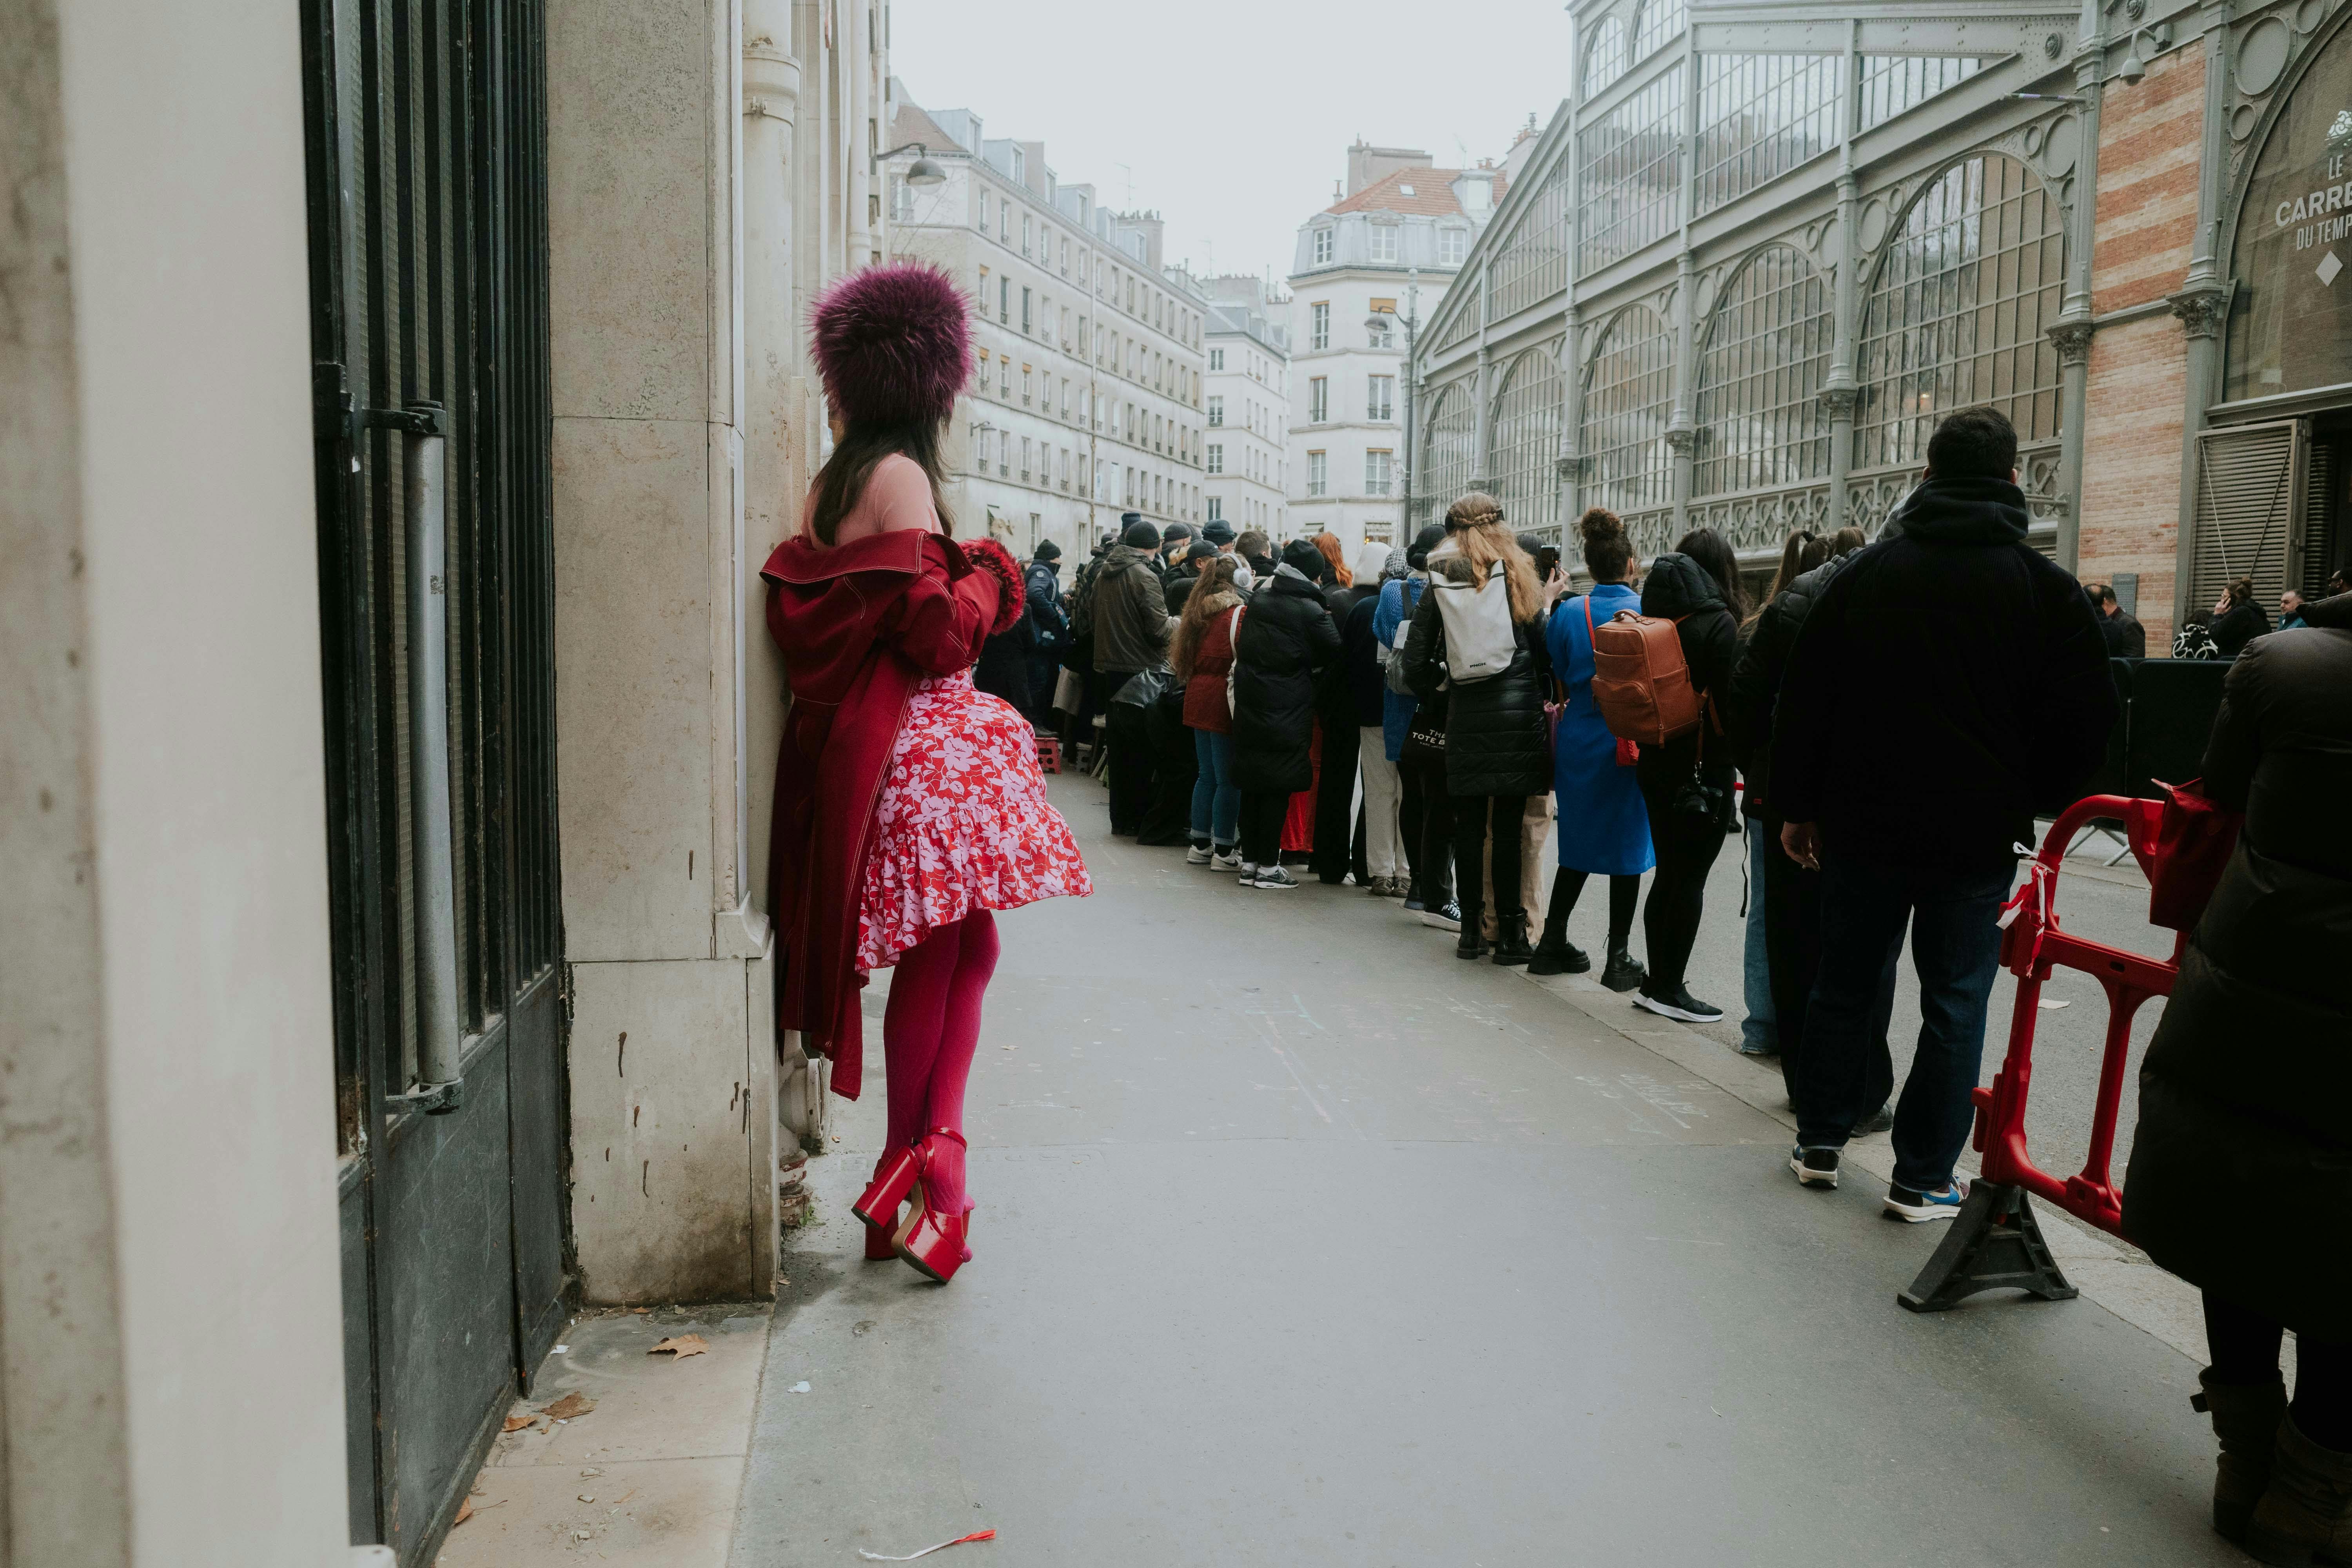 A woman standing near a long queue. | Source: Pexels